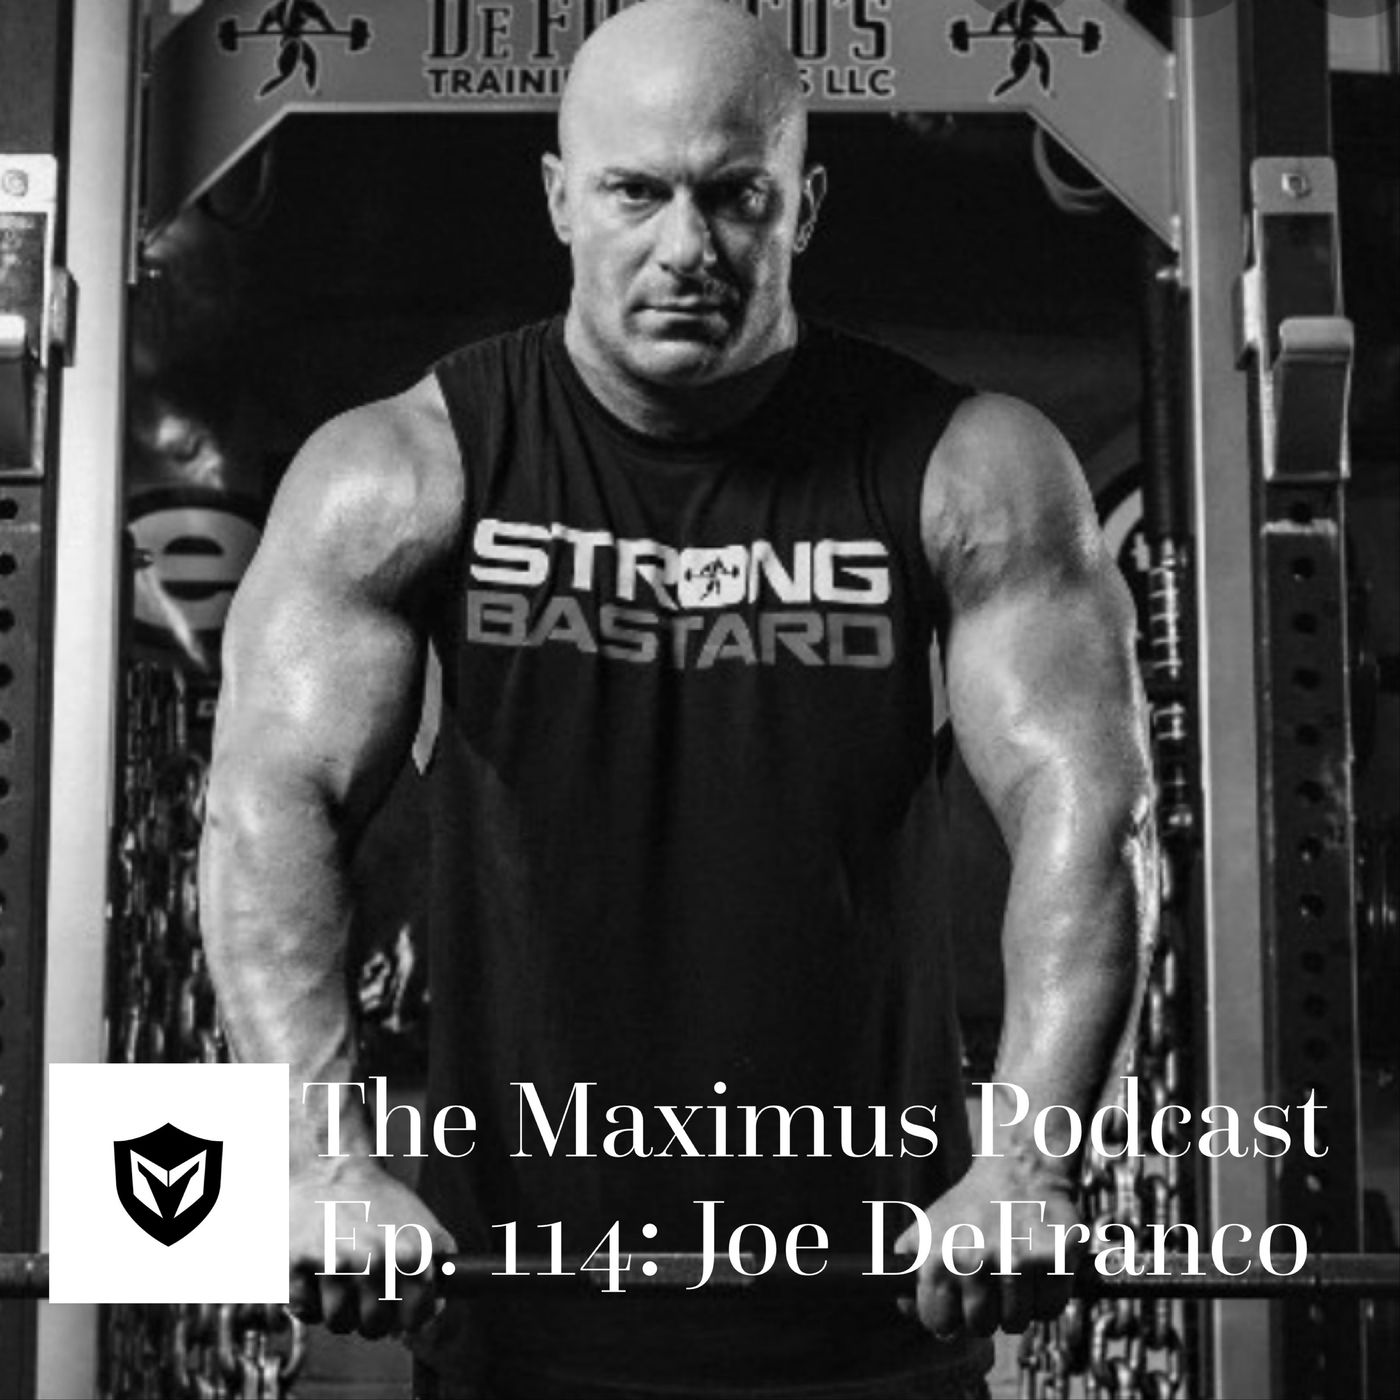 The Maximus Podcast Ep. 114 - Joe DeFranco